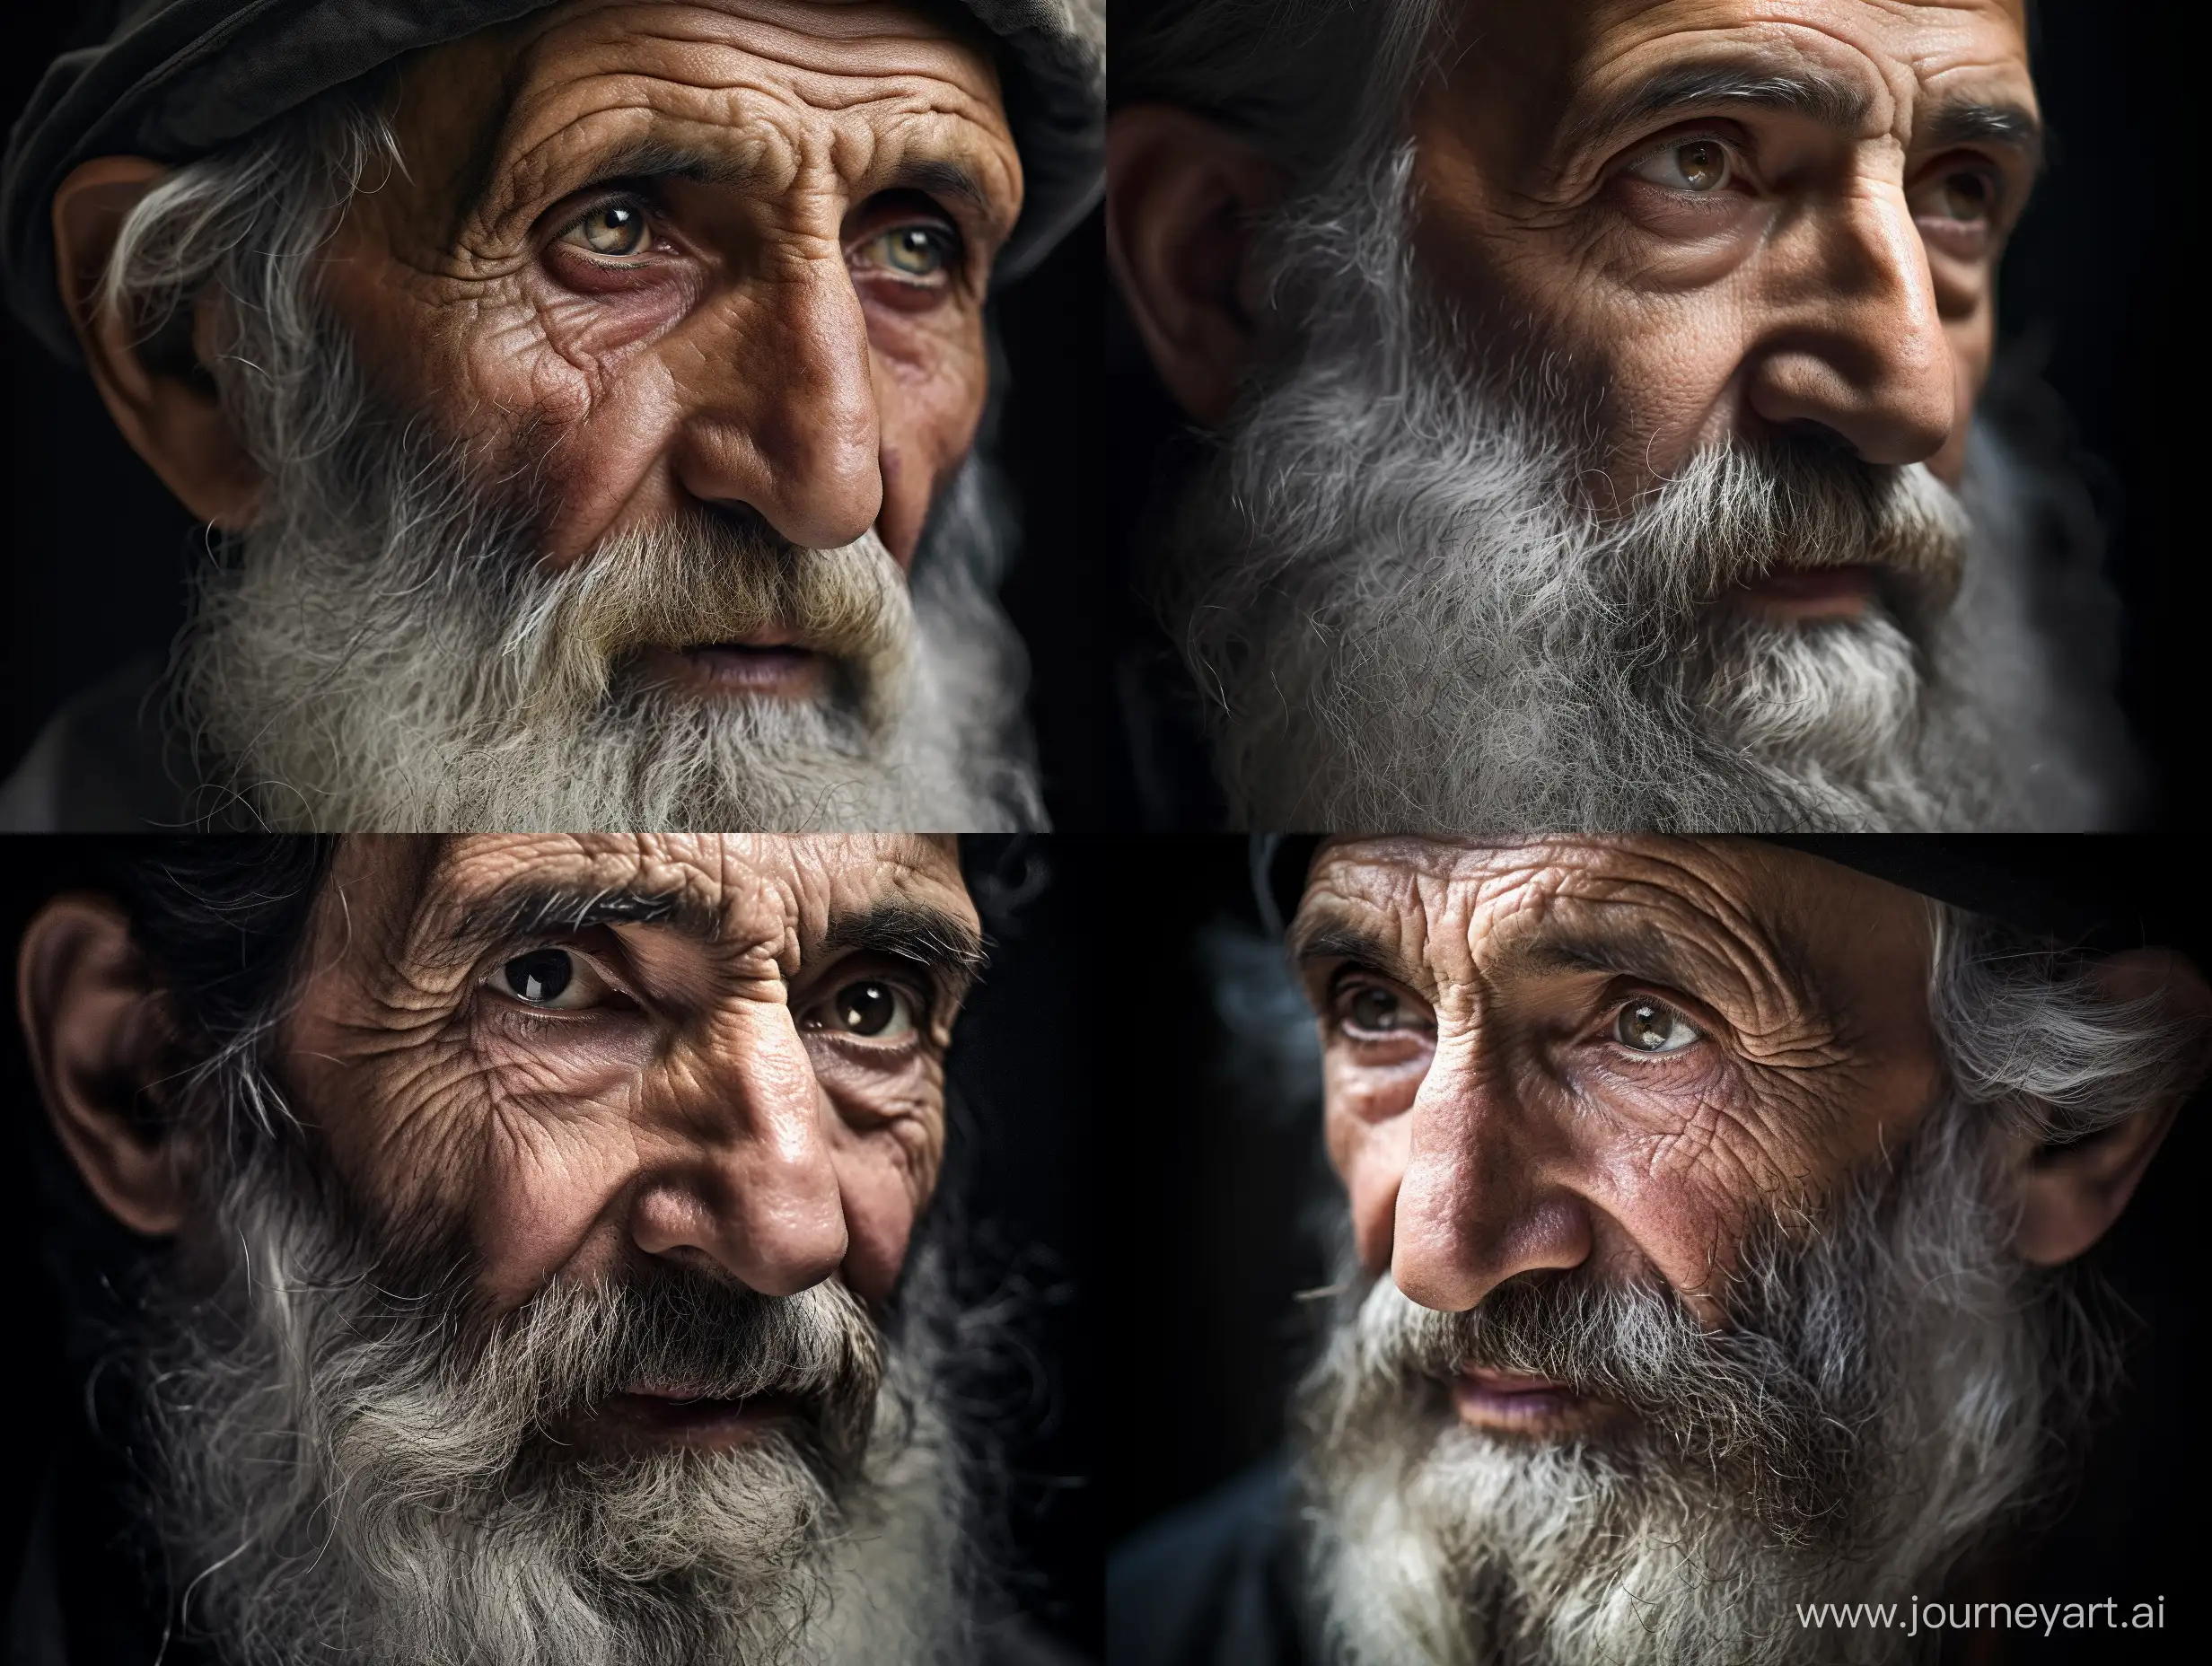 Political-Icons-Merge-Powerful-Portrait-Fusion-of-Seyyed-Ali-Khamenei-and-Fidel-Castro